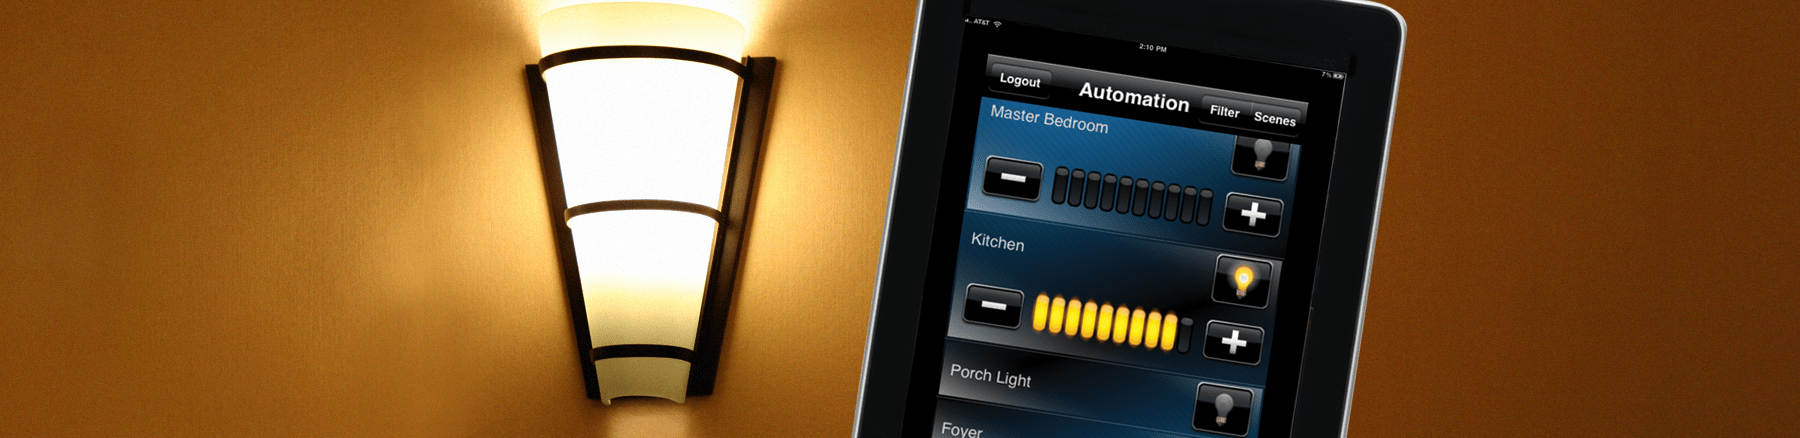 lighting control app on phone